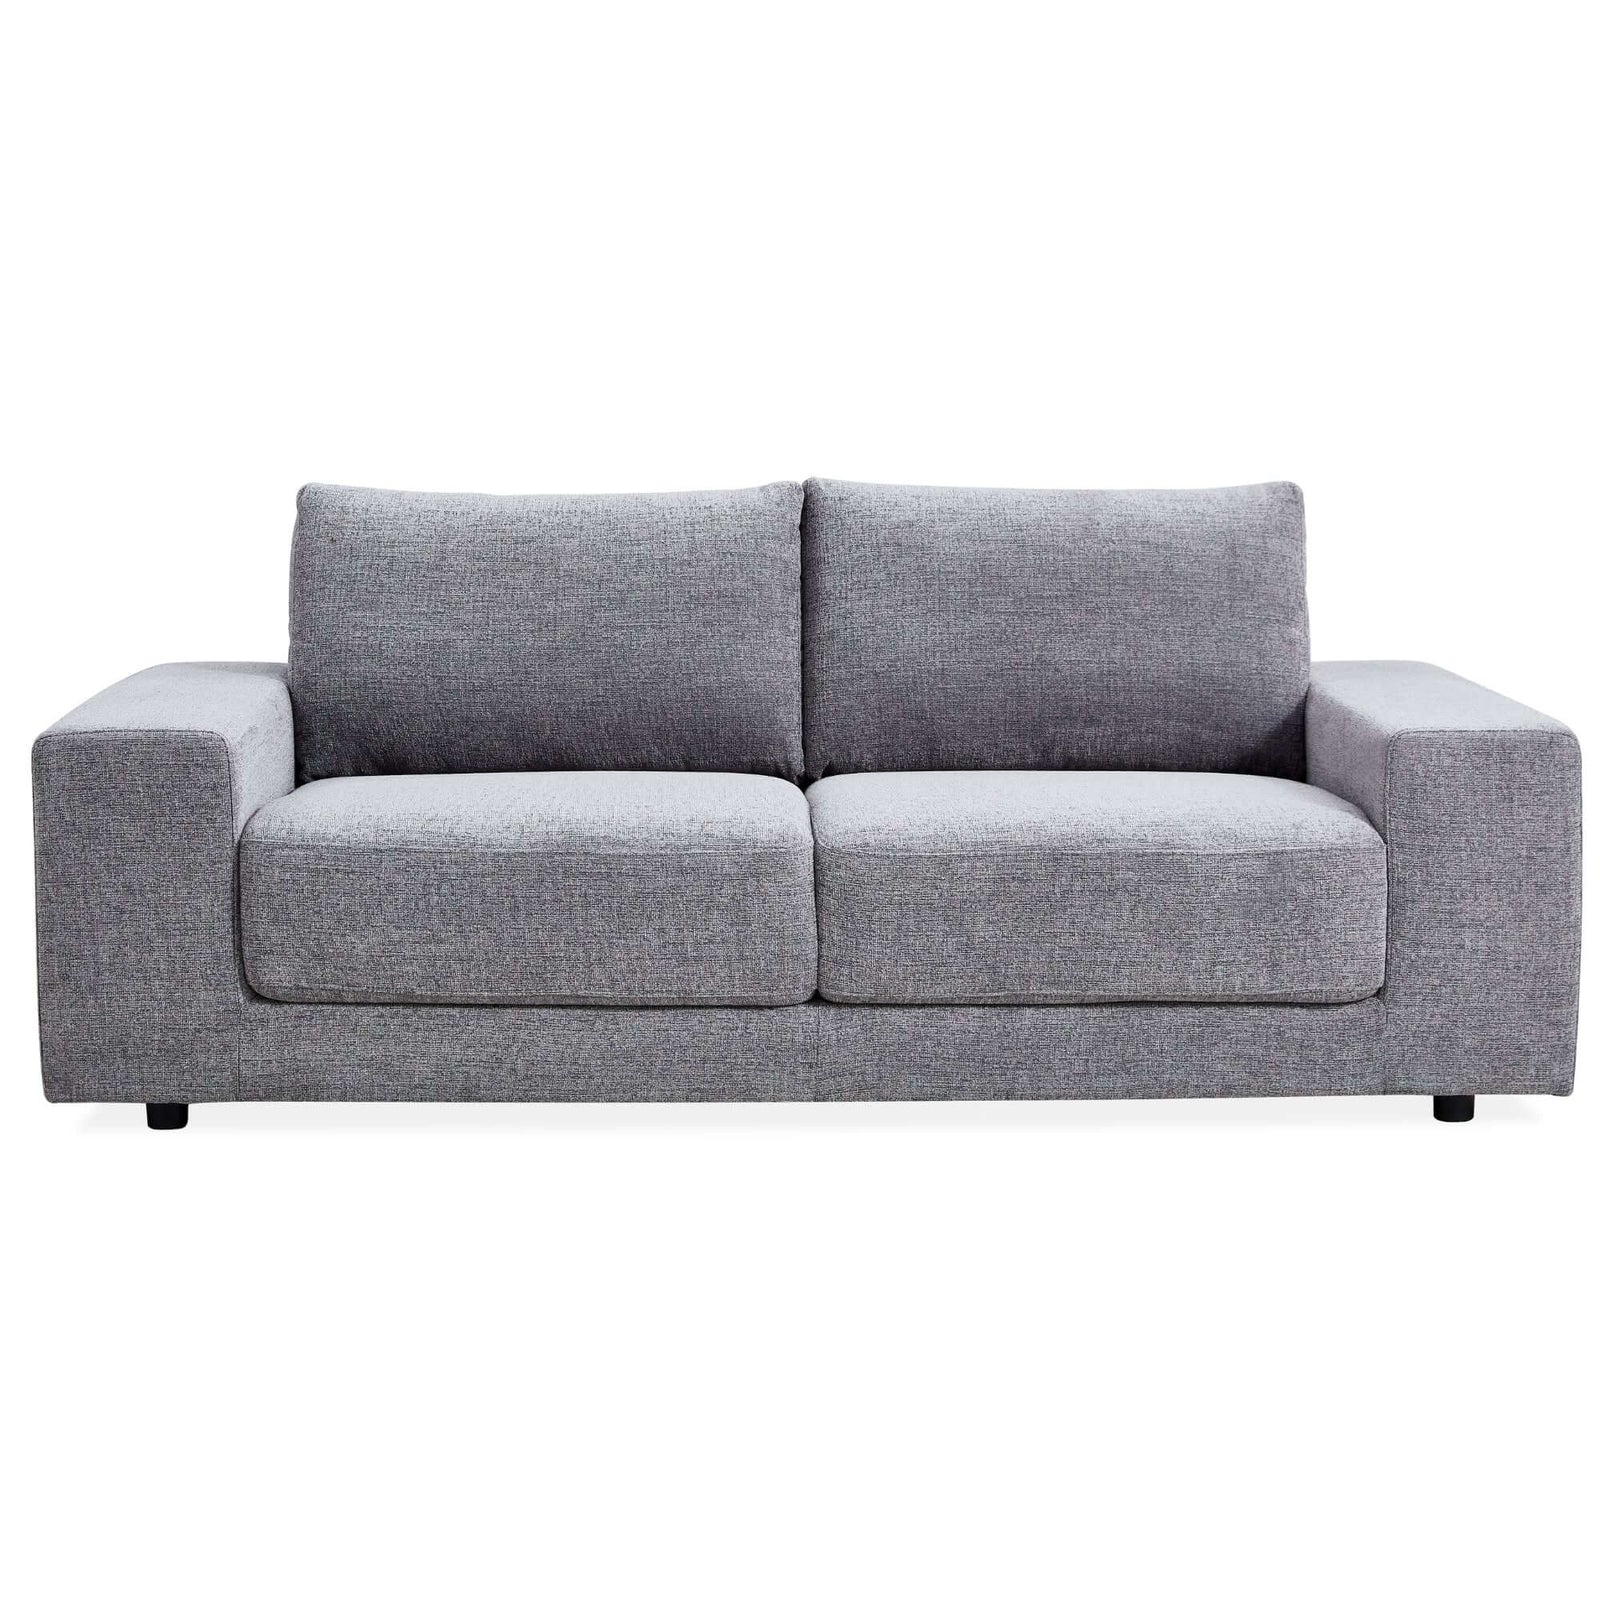 Eliana 3 Seater Sofa Fabric Uplholstered Lounge Couch - Fog-Upinteriors